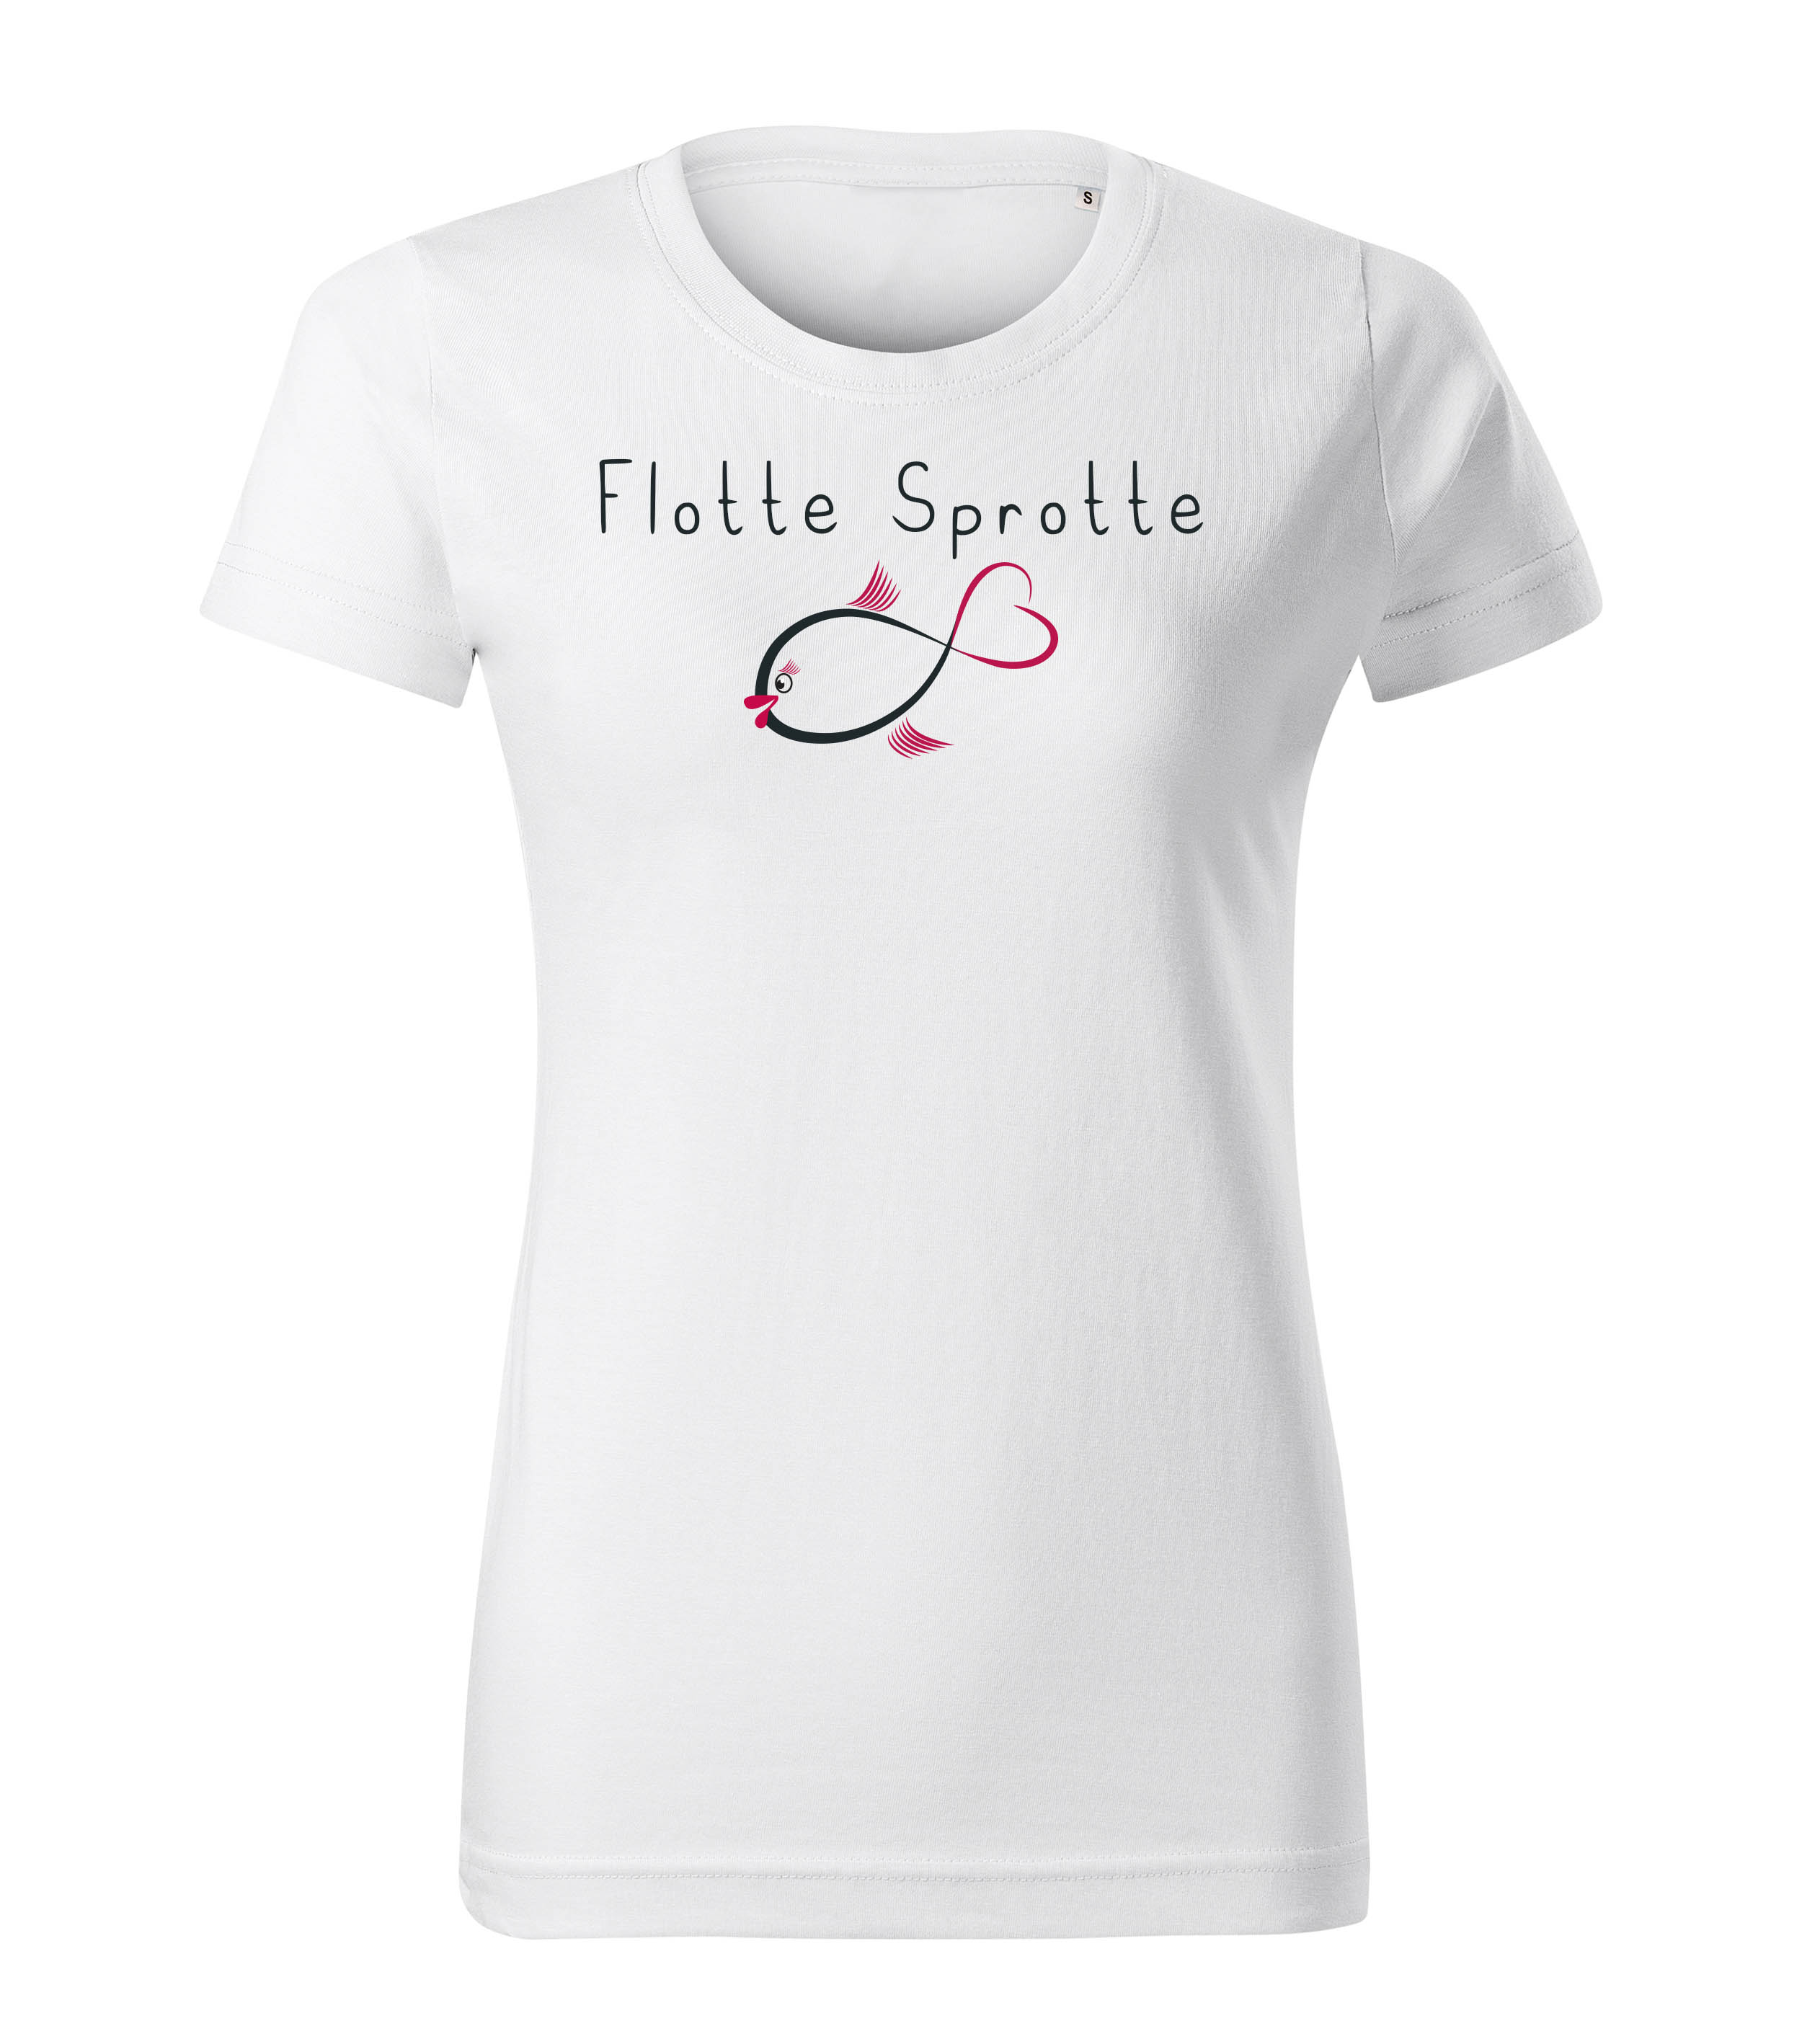 T-shirt Damen Sommer - Flotte Sprotte - Damen bedruckt Schrift Print Motiv Fisch Lustig Frauen Weiß, Hellgrau Meliert ausgefallene Tshirts Damen Shirts Damen Sommer